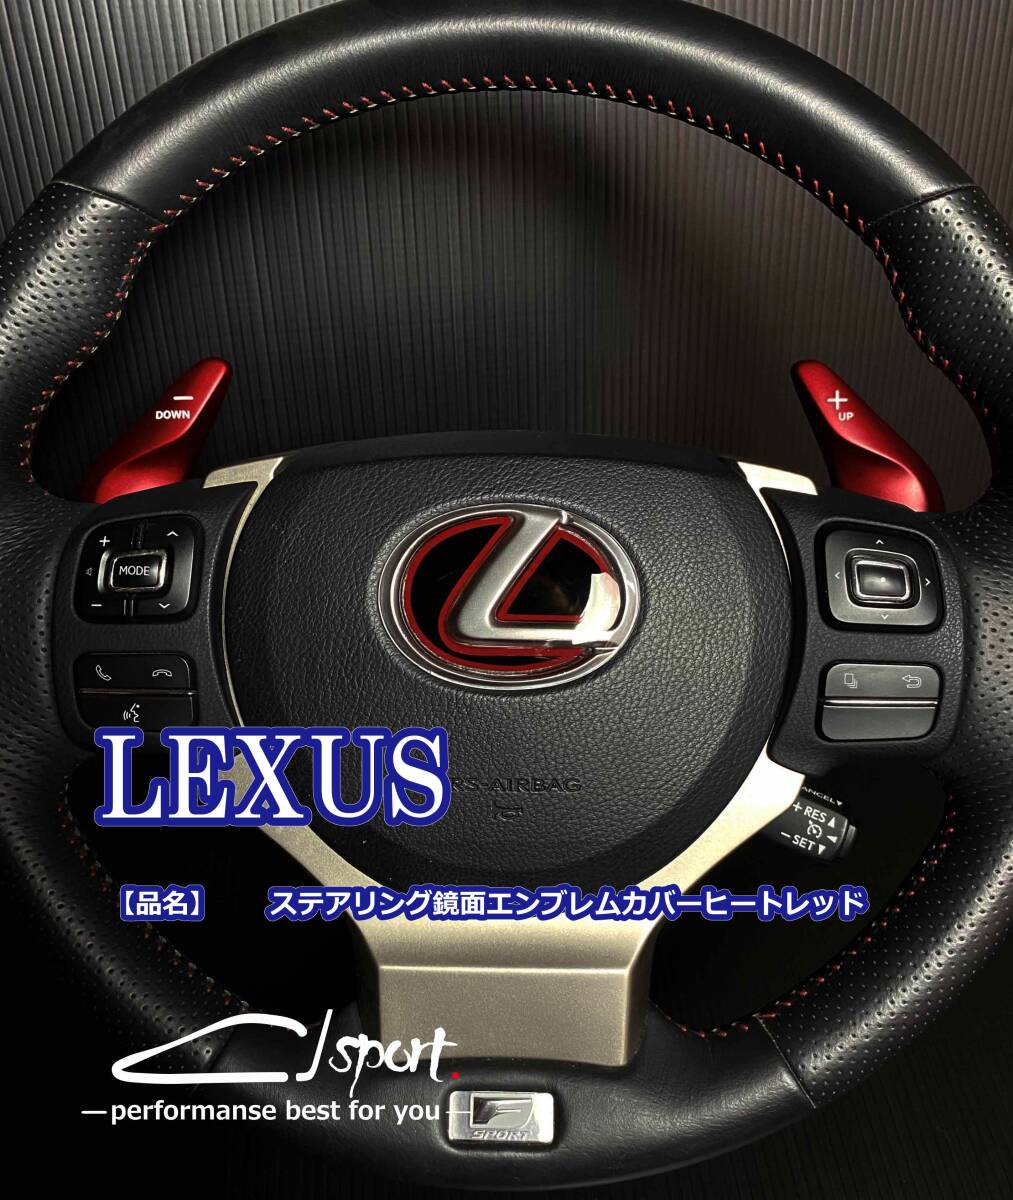 LEXUS Lexus steering gear specular emblem cover heat red all-purpose GS IS NX RX RC LS LX etc****